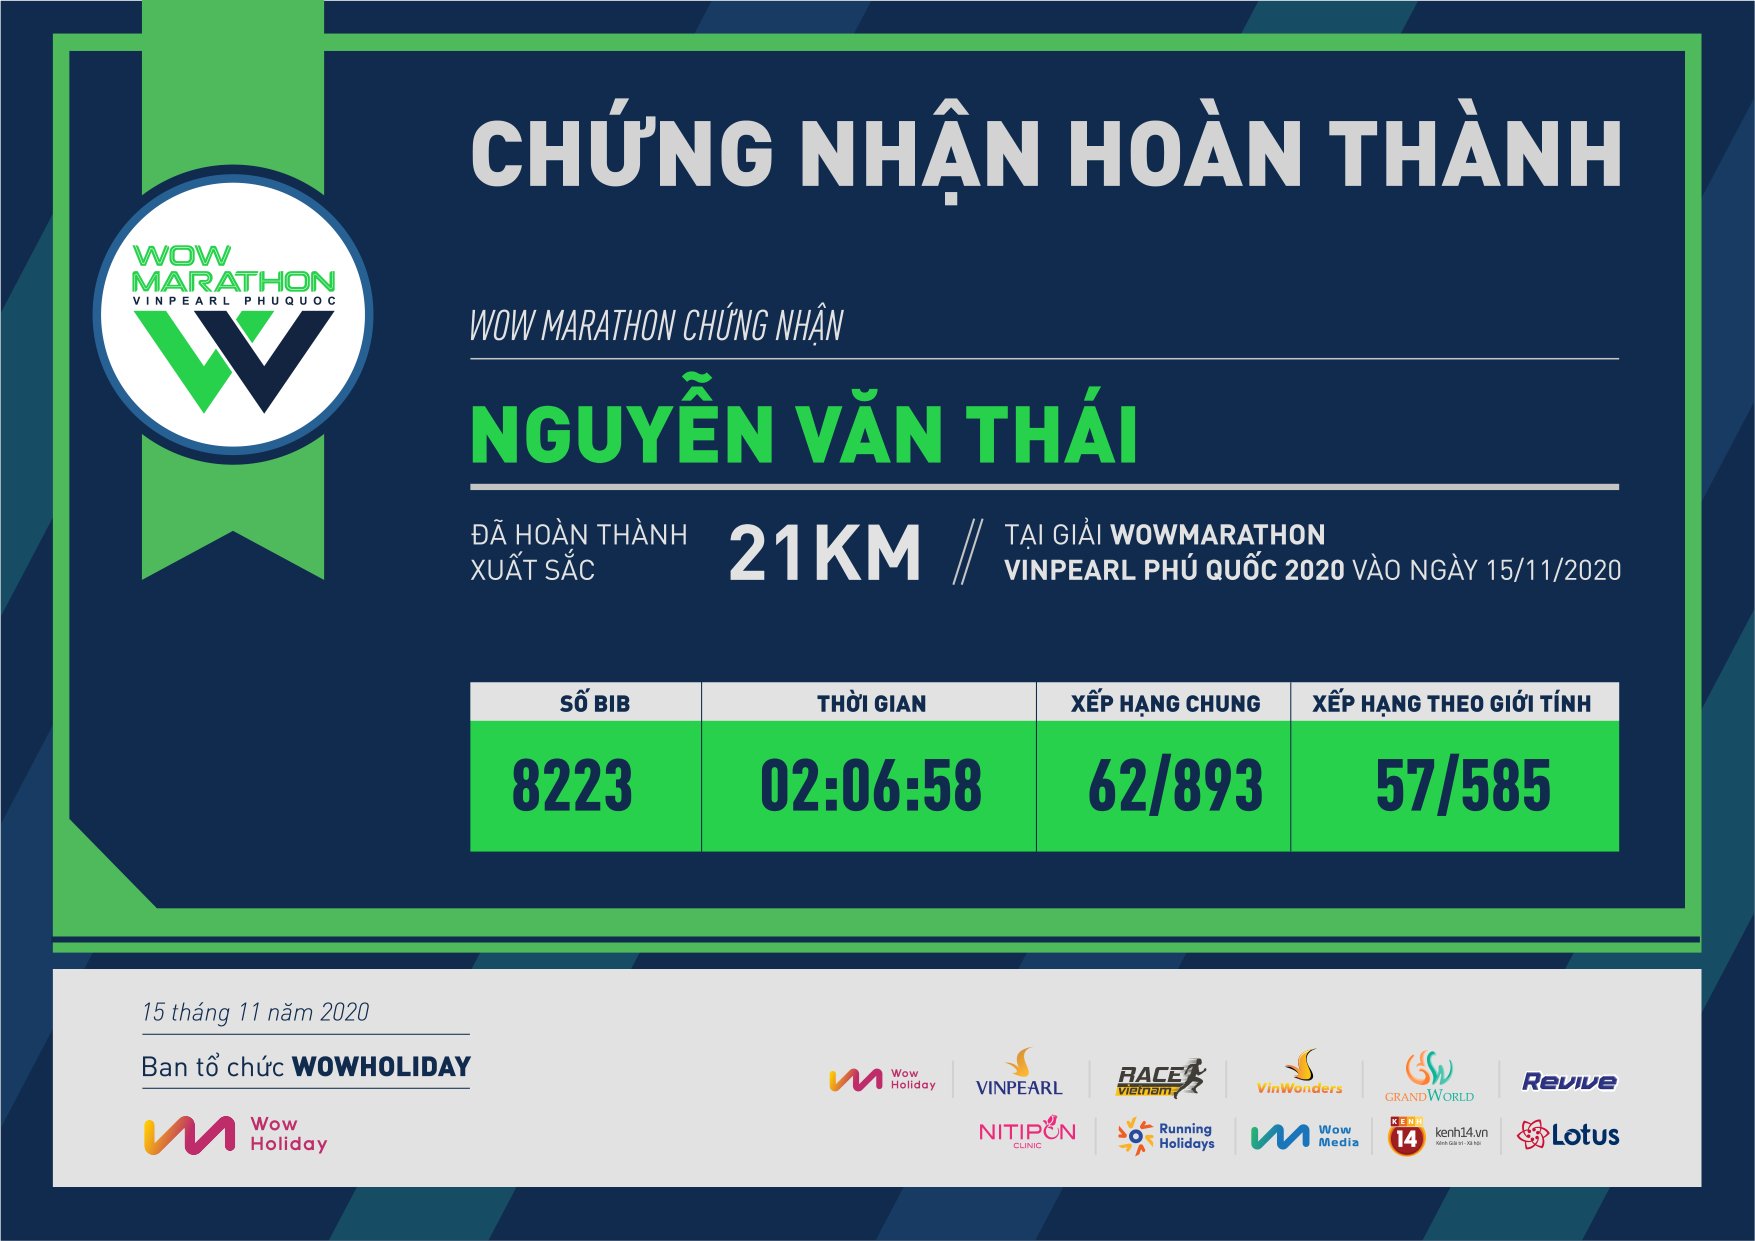 8223 - Nguyễn Văn Thái